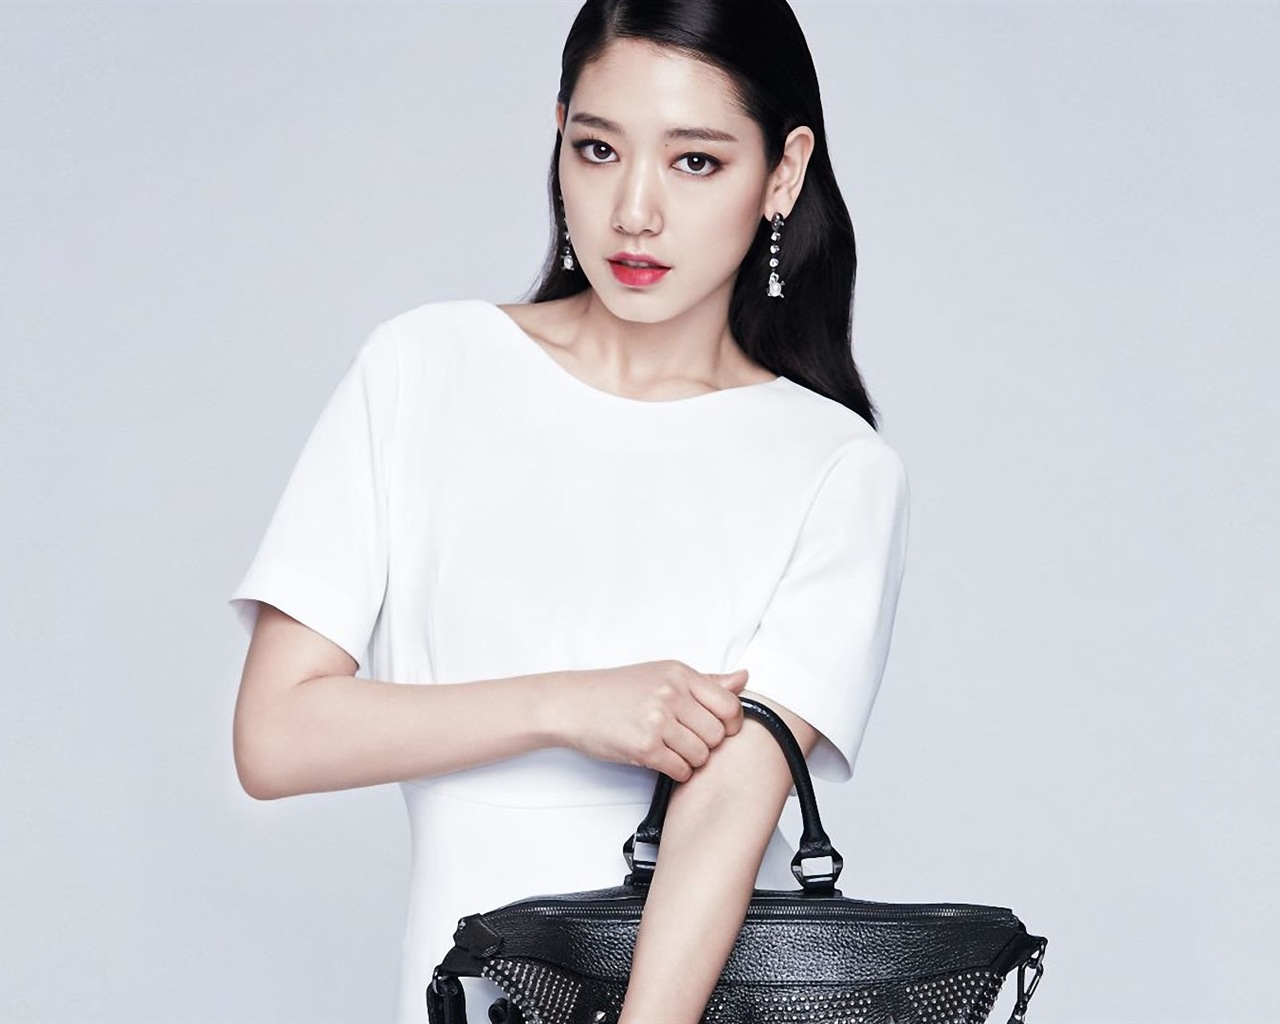 South Korean actress Park Shin Hye HD Wallpapers #20 - 1280x1024